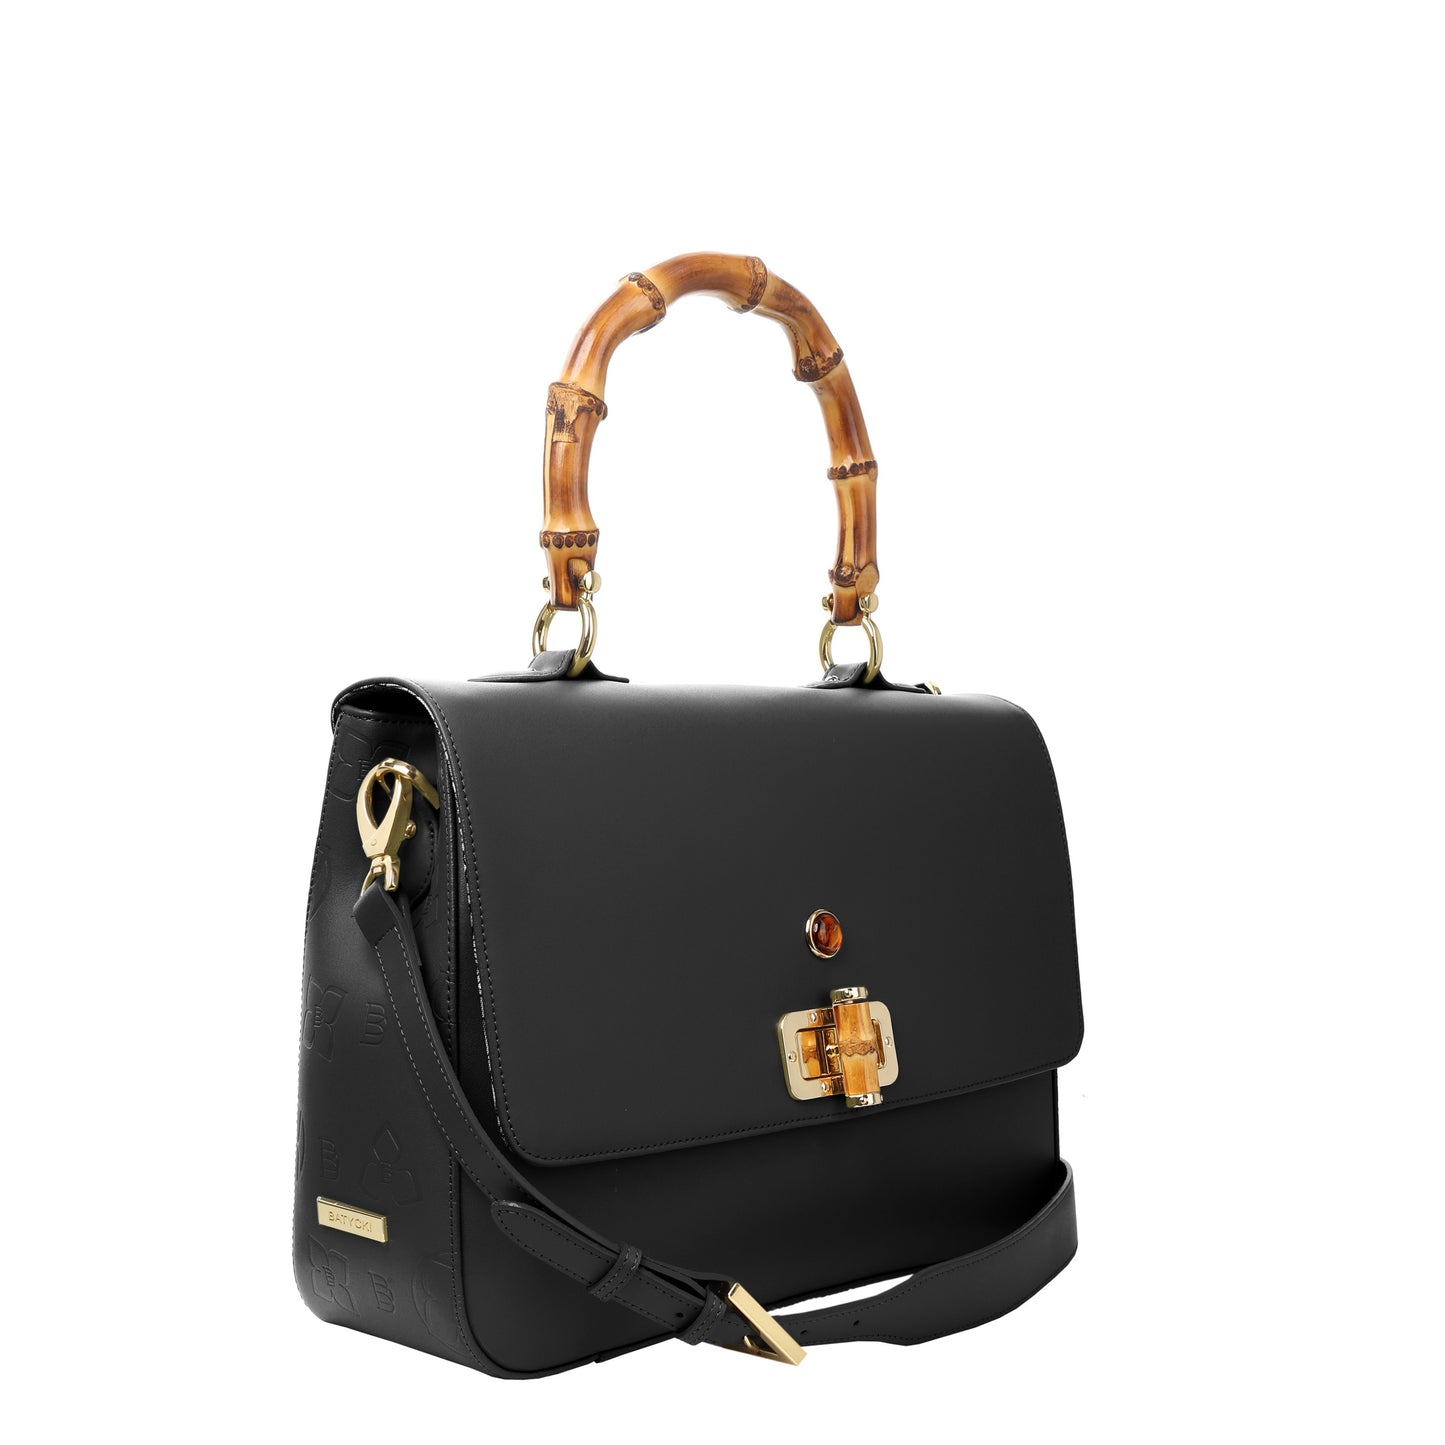 MERA NAPA BLACK women's leather handbag